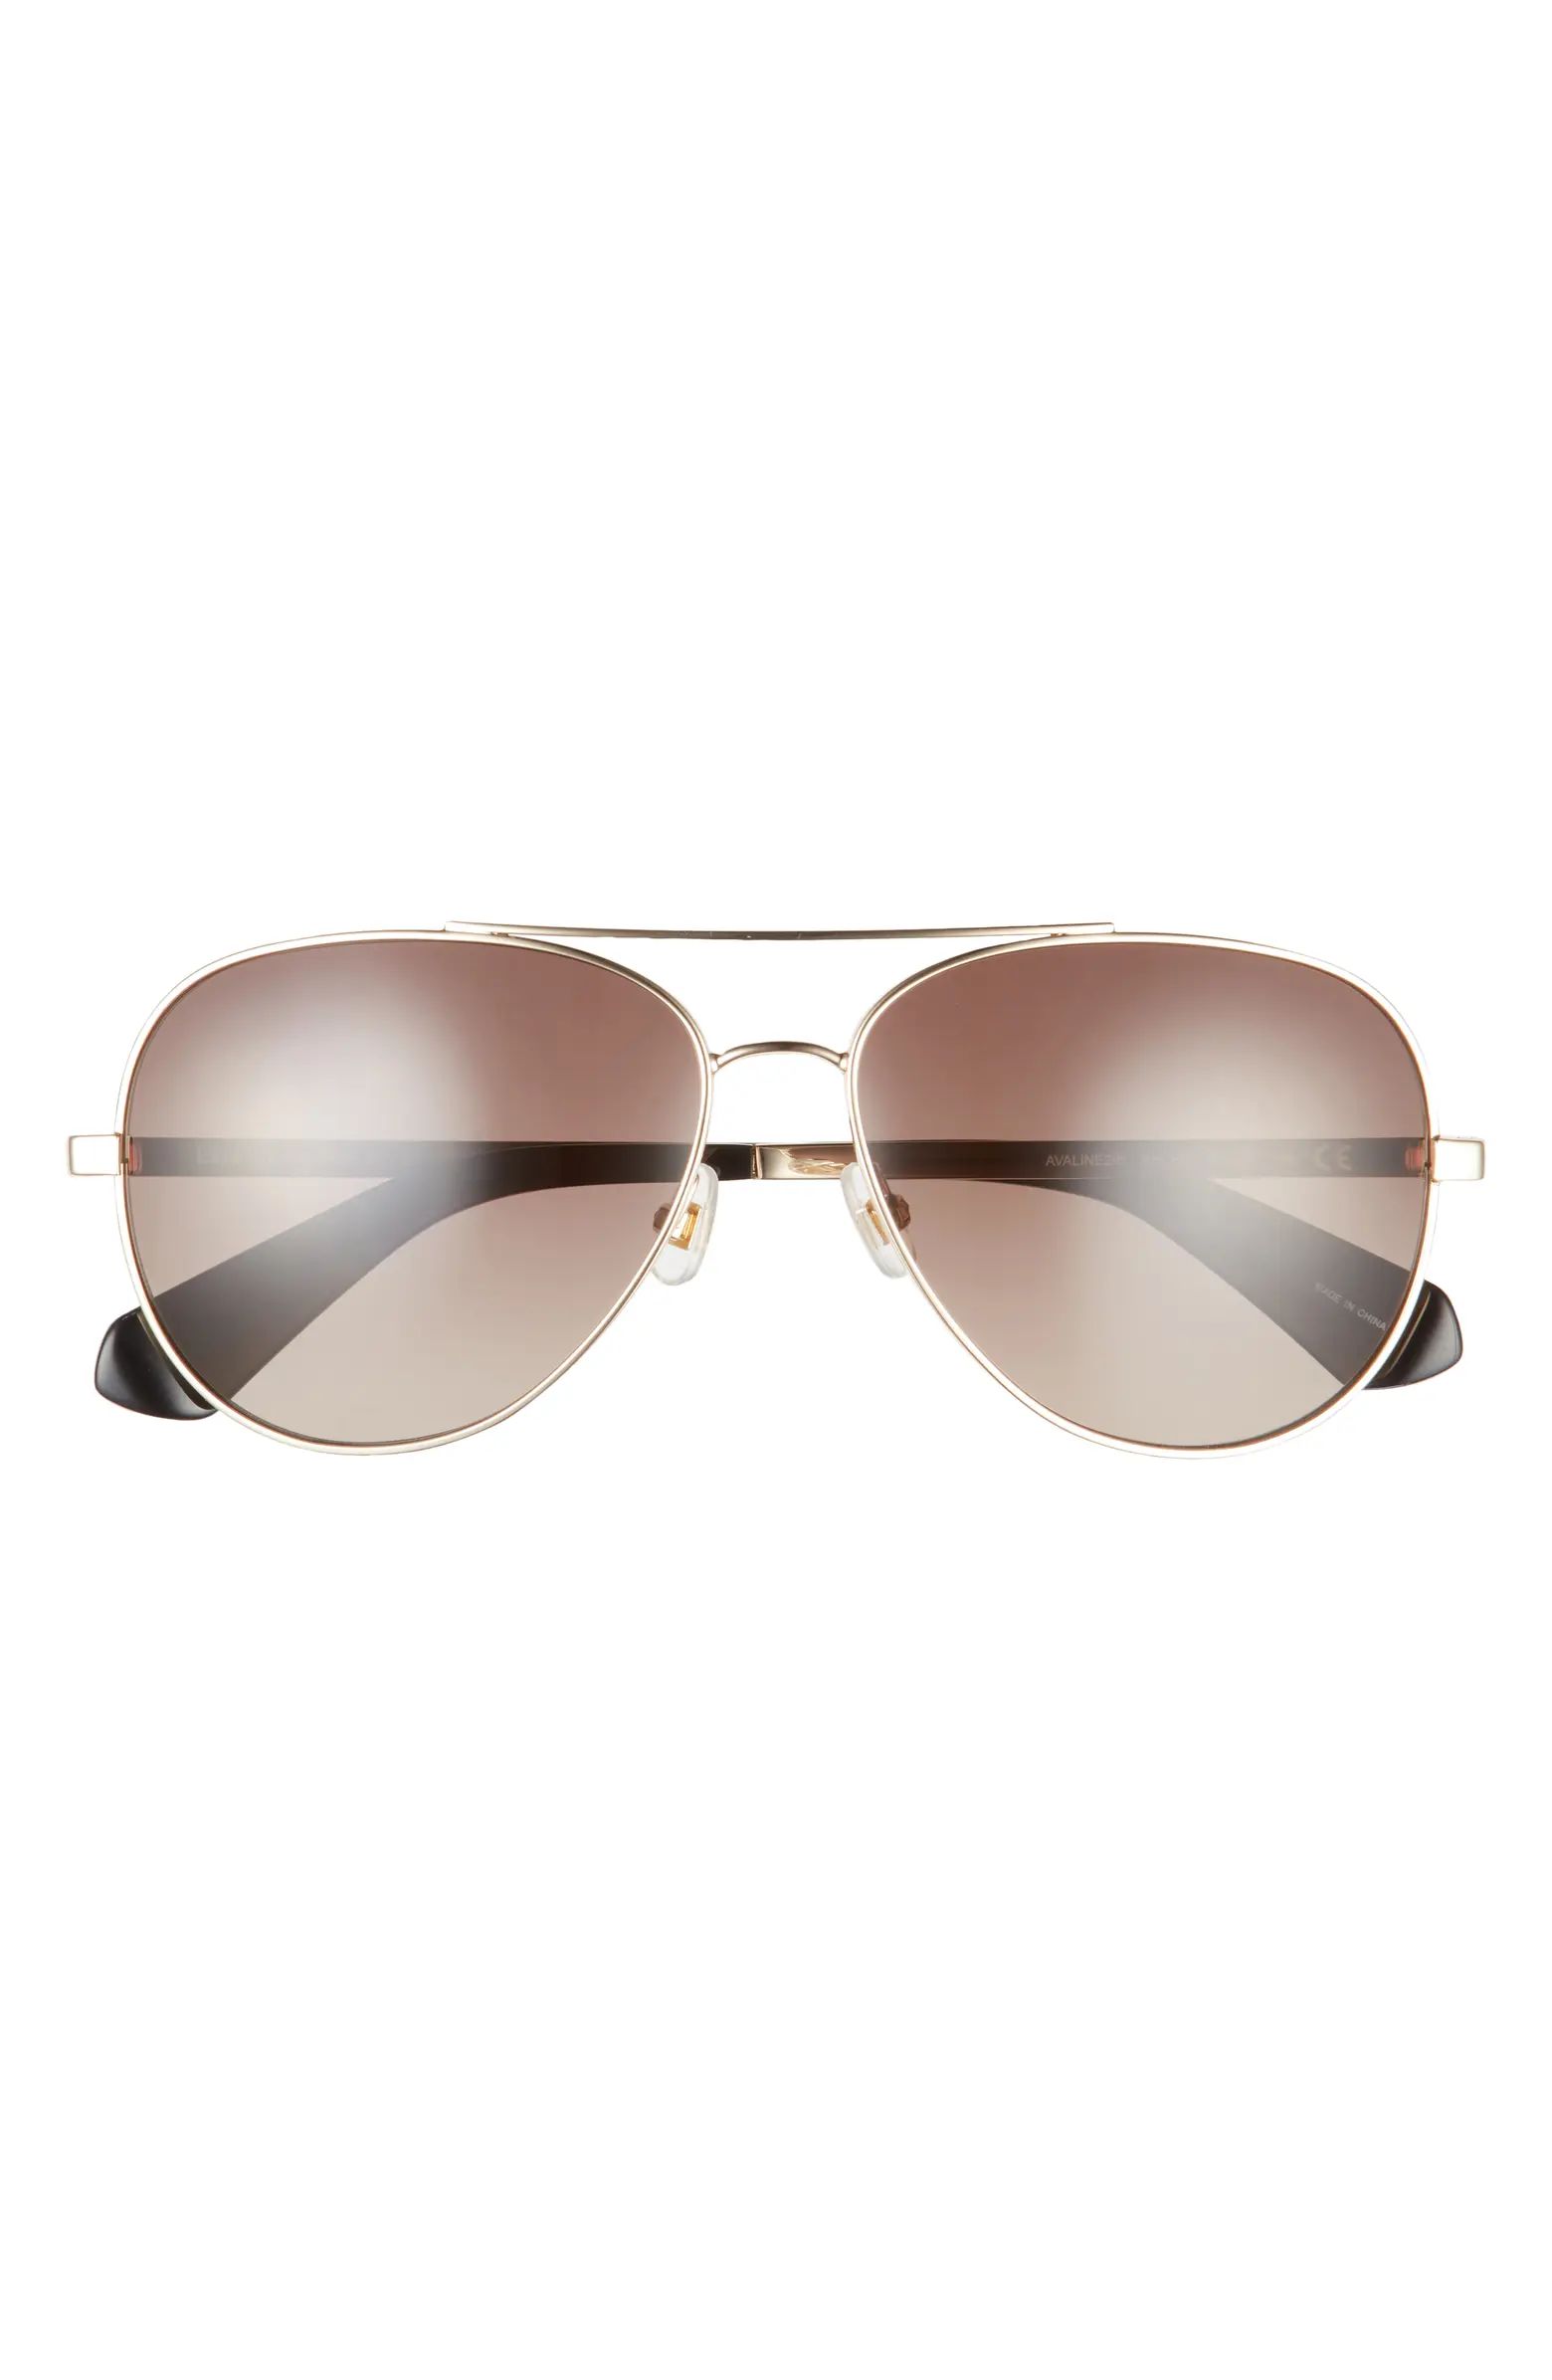 avaline2 58mm gradient aviator sunglasses | Nordstrom